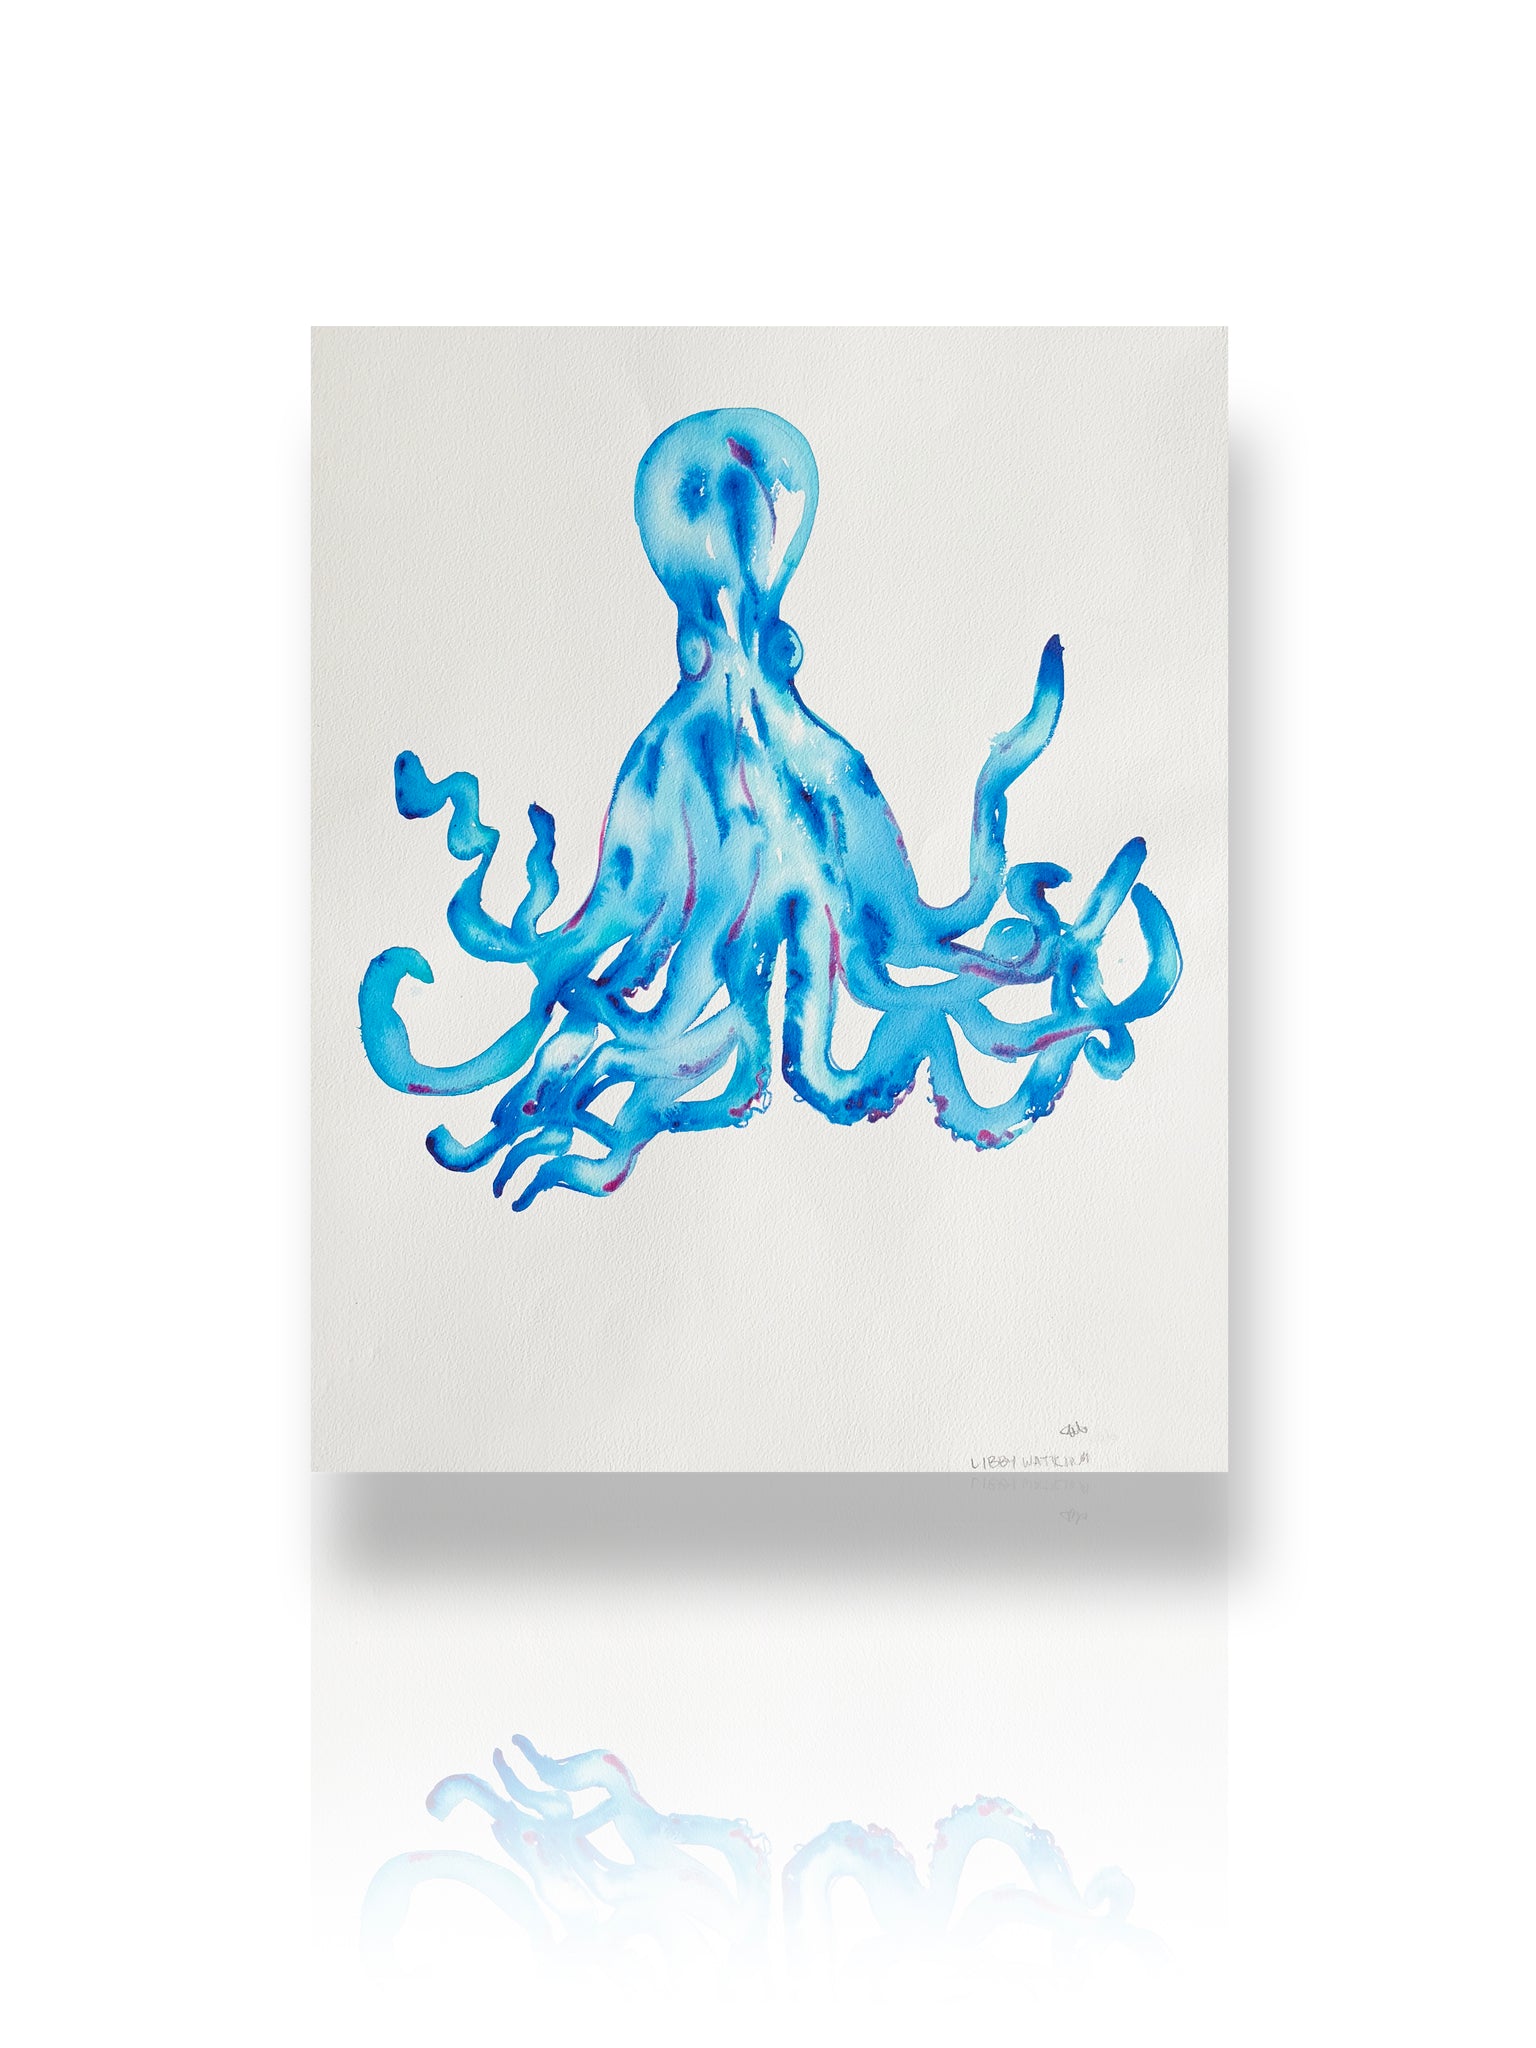 Octopus - Yves Klein Shades